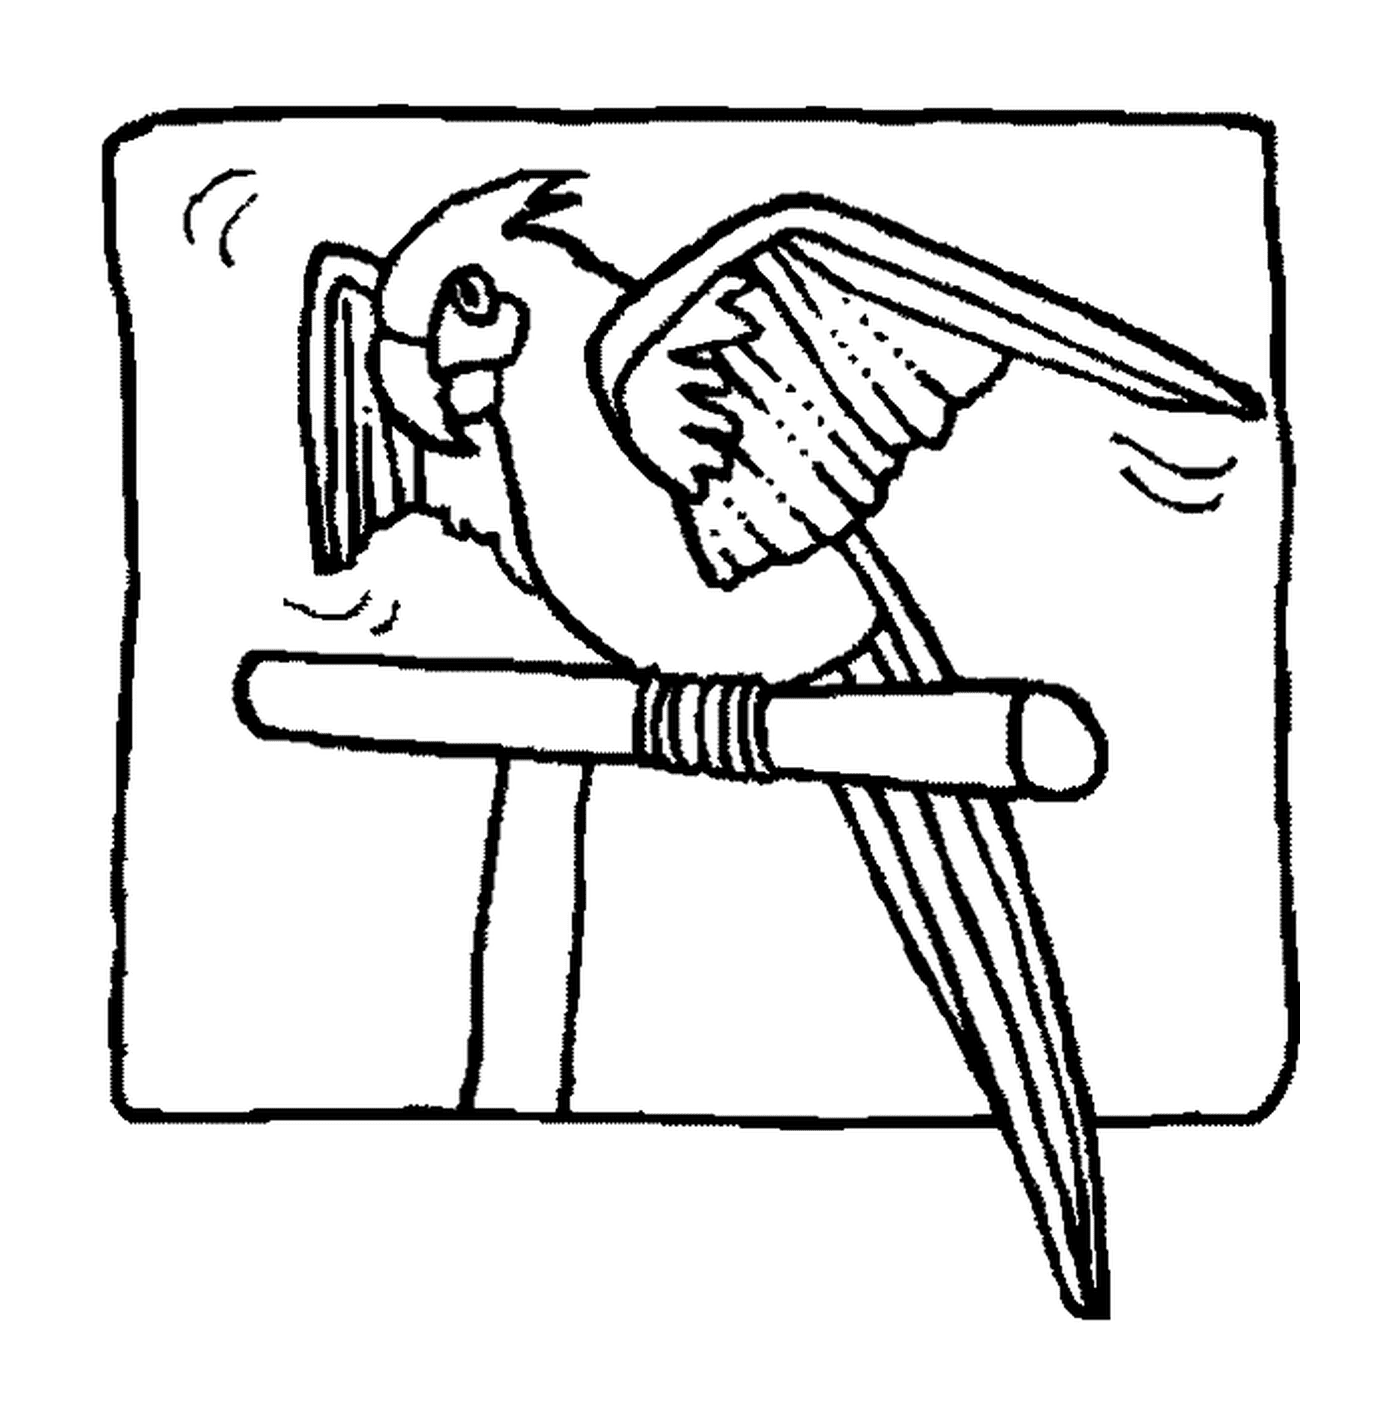  Parrot estendendo suas asas majestosamente 